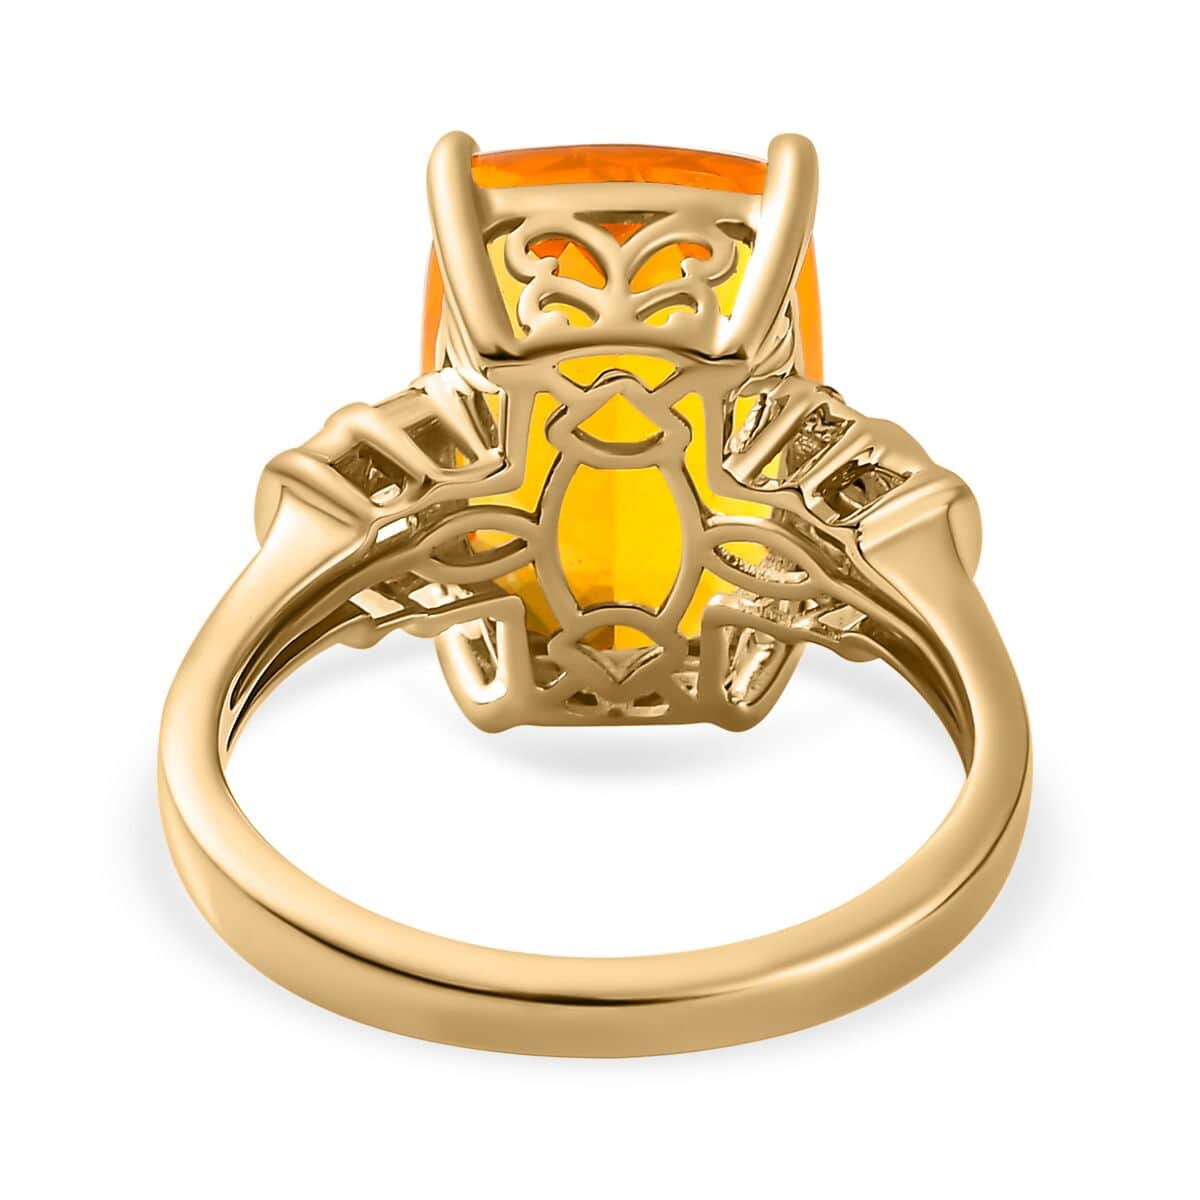 Luxoro 10K Yellow Gold Premium BURITI Fire Opal and G-H I3 Diamond Ring (Size 9.0) 4.85 ctw image number 4